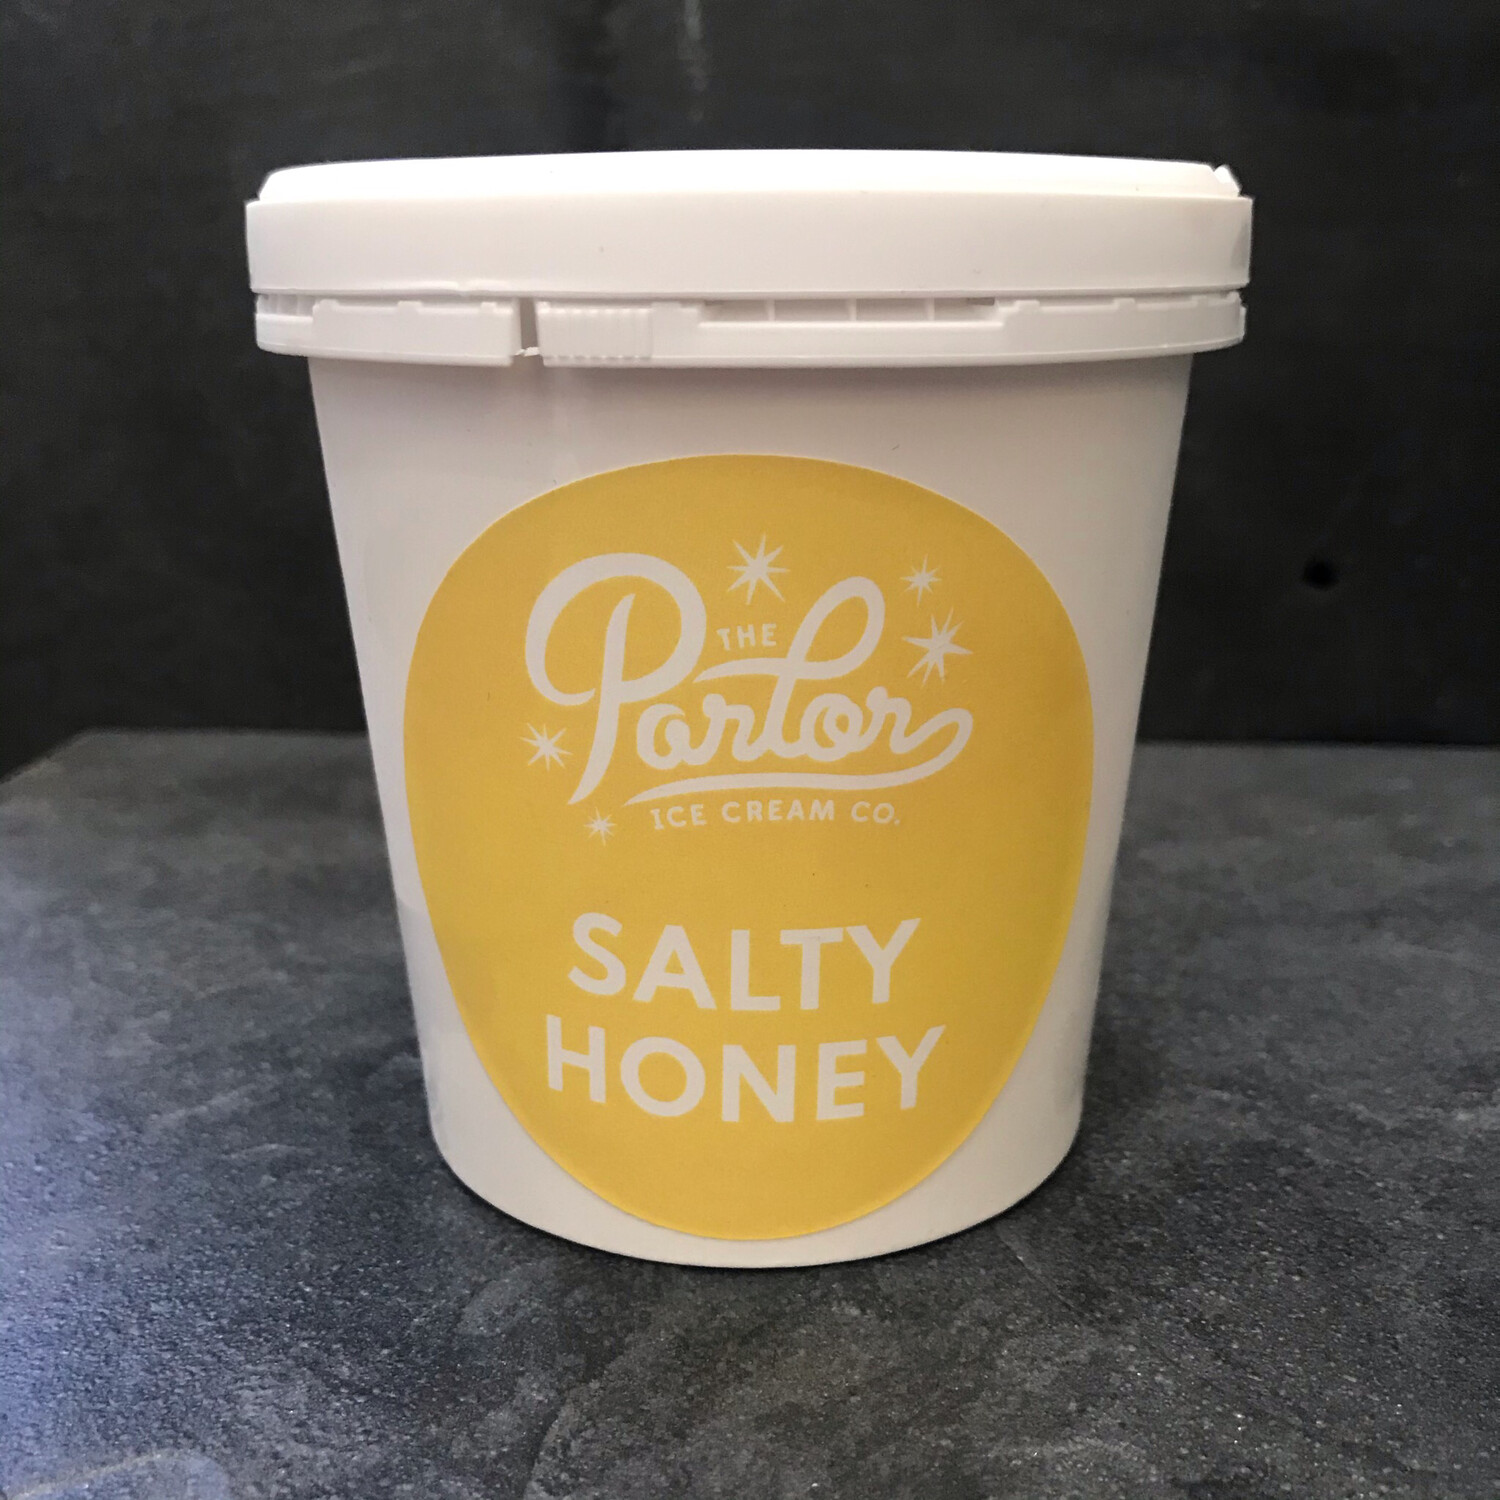 Parlor Salty Honey